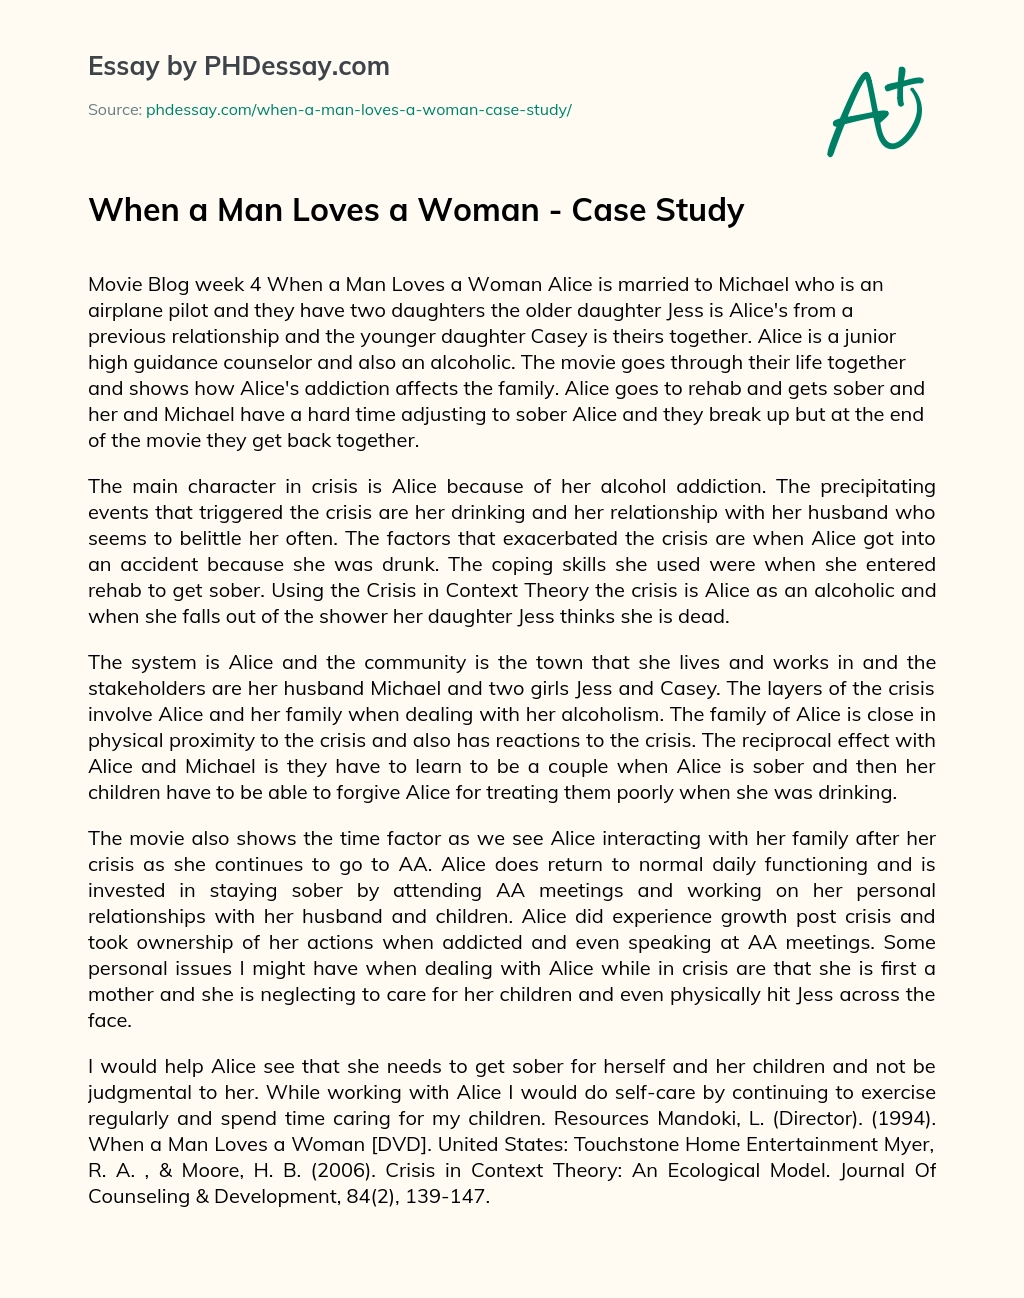 When a Man Loves a Woman – Case Study essay